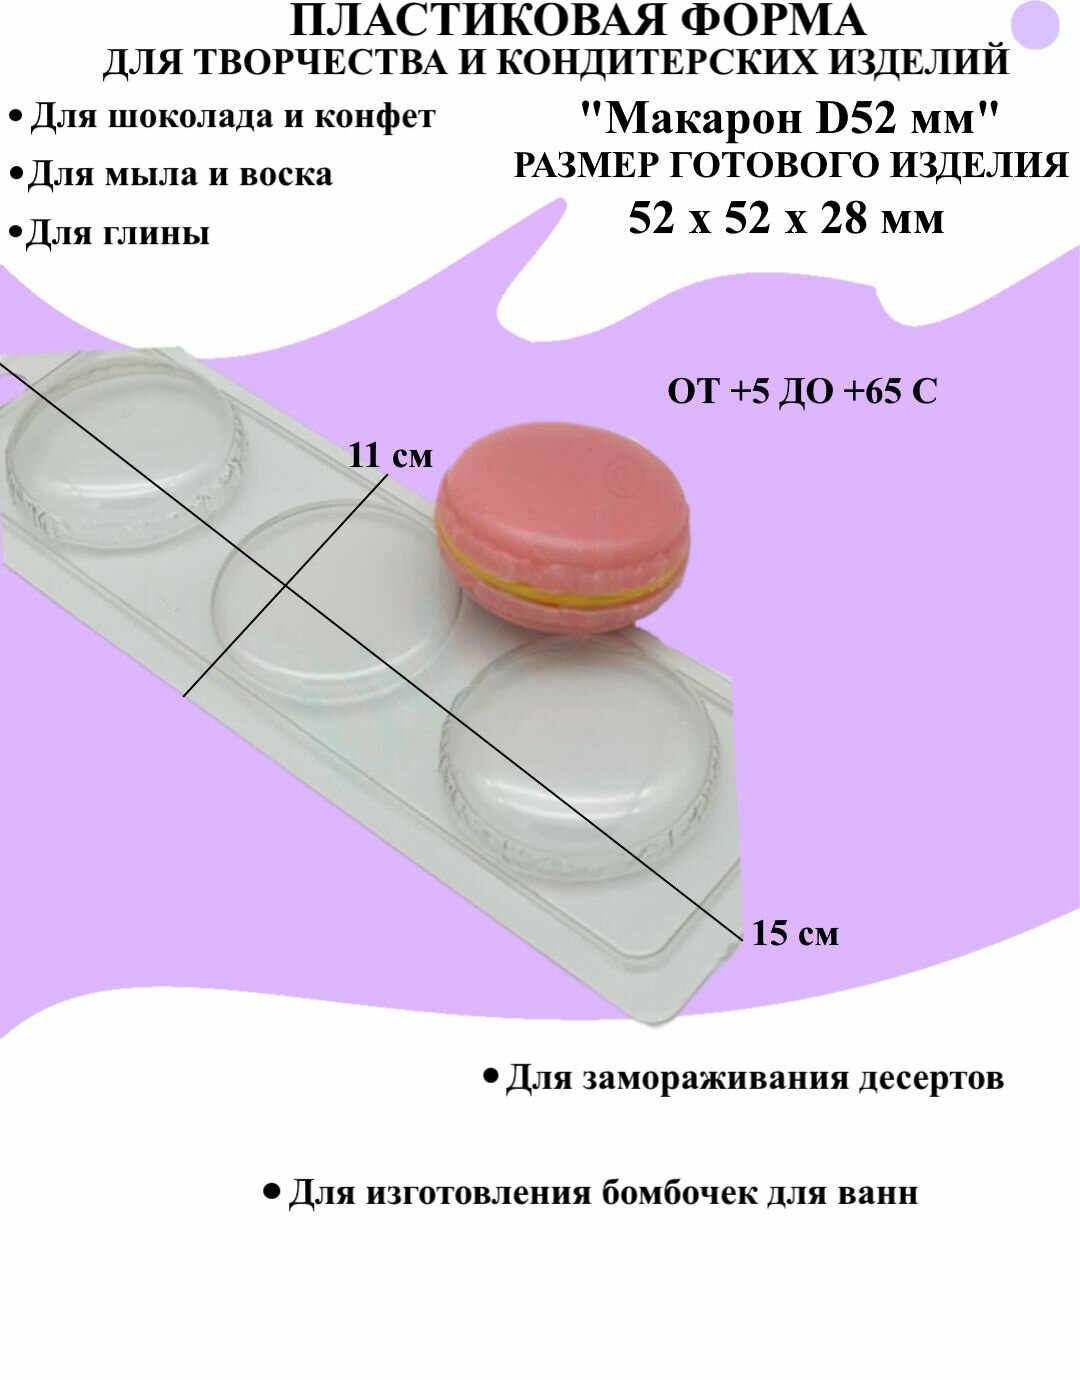 Форма пластиковая для мыла и шоколада / Макарон D52 мм